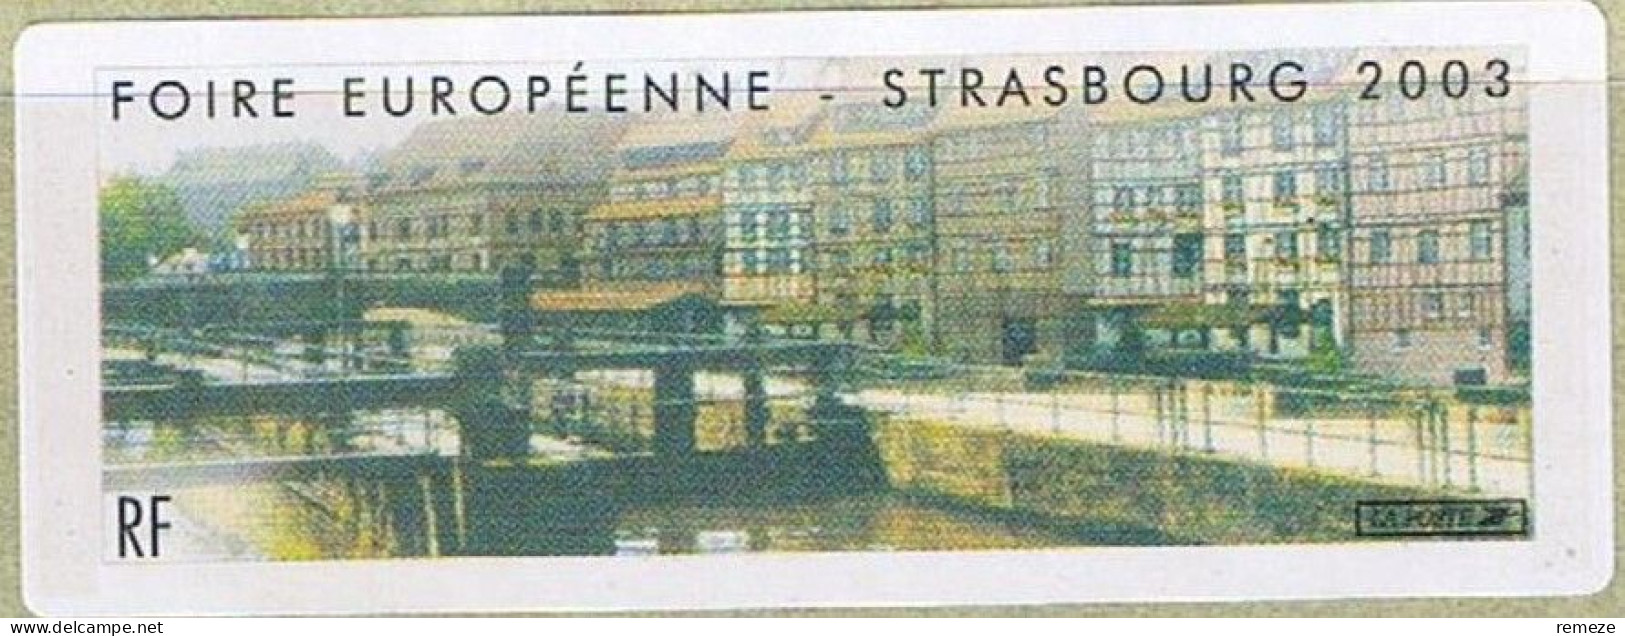 LISA - 2003 -  Strasbourg Foire Européenne ( Enveloppe Avec Cachet Du Conseil De L'europe Du 29 Sept  ) - 1999-2009 Illustrated Franking Labels